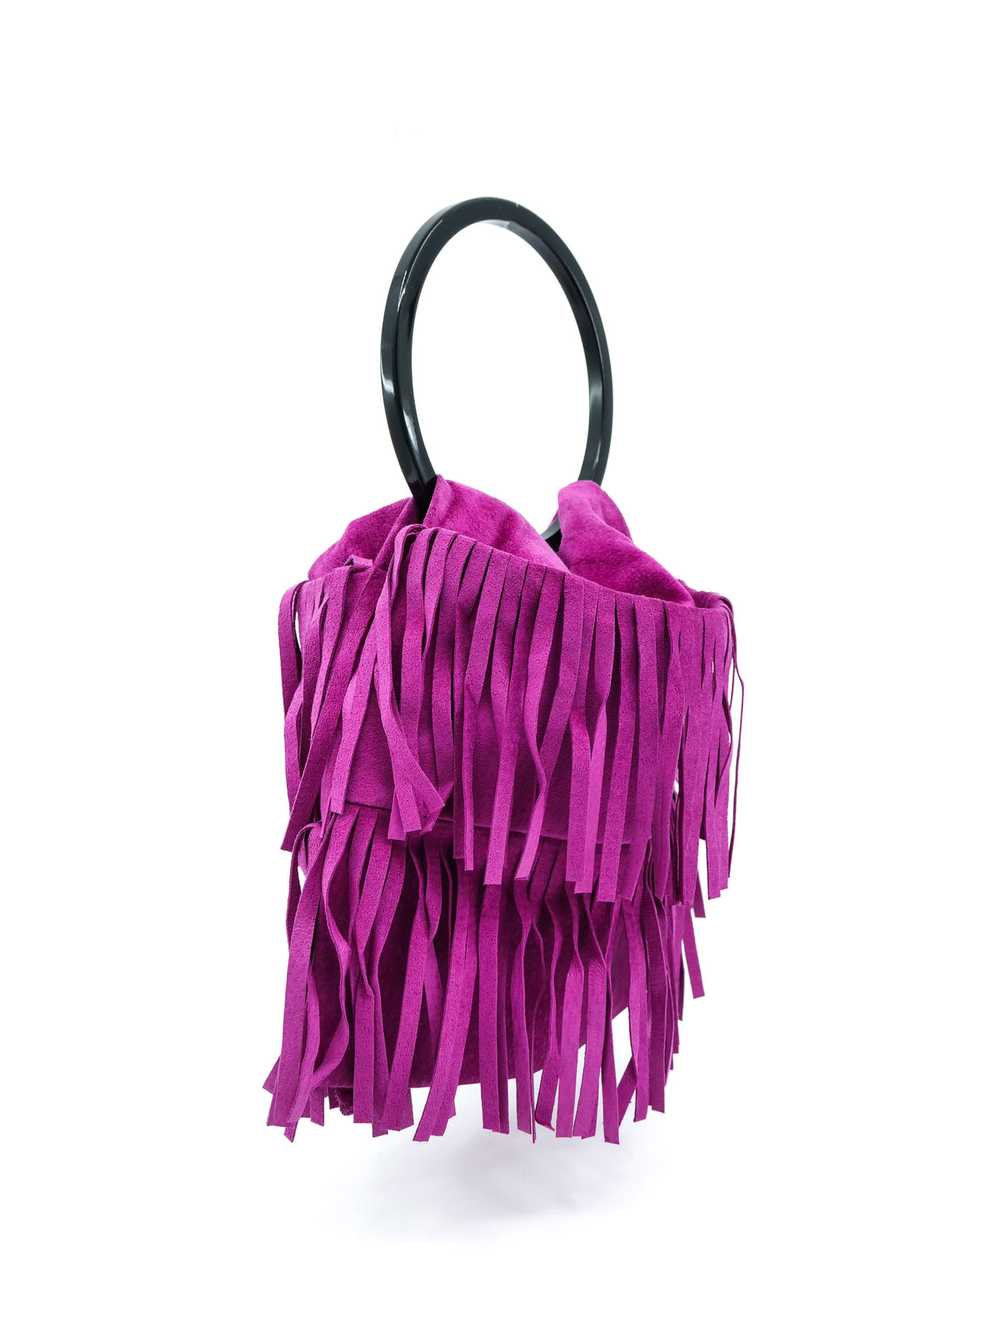 Yves Saint Laurent Fuschia Suede Fringed Bag - image 4